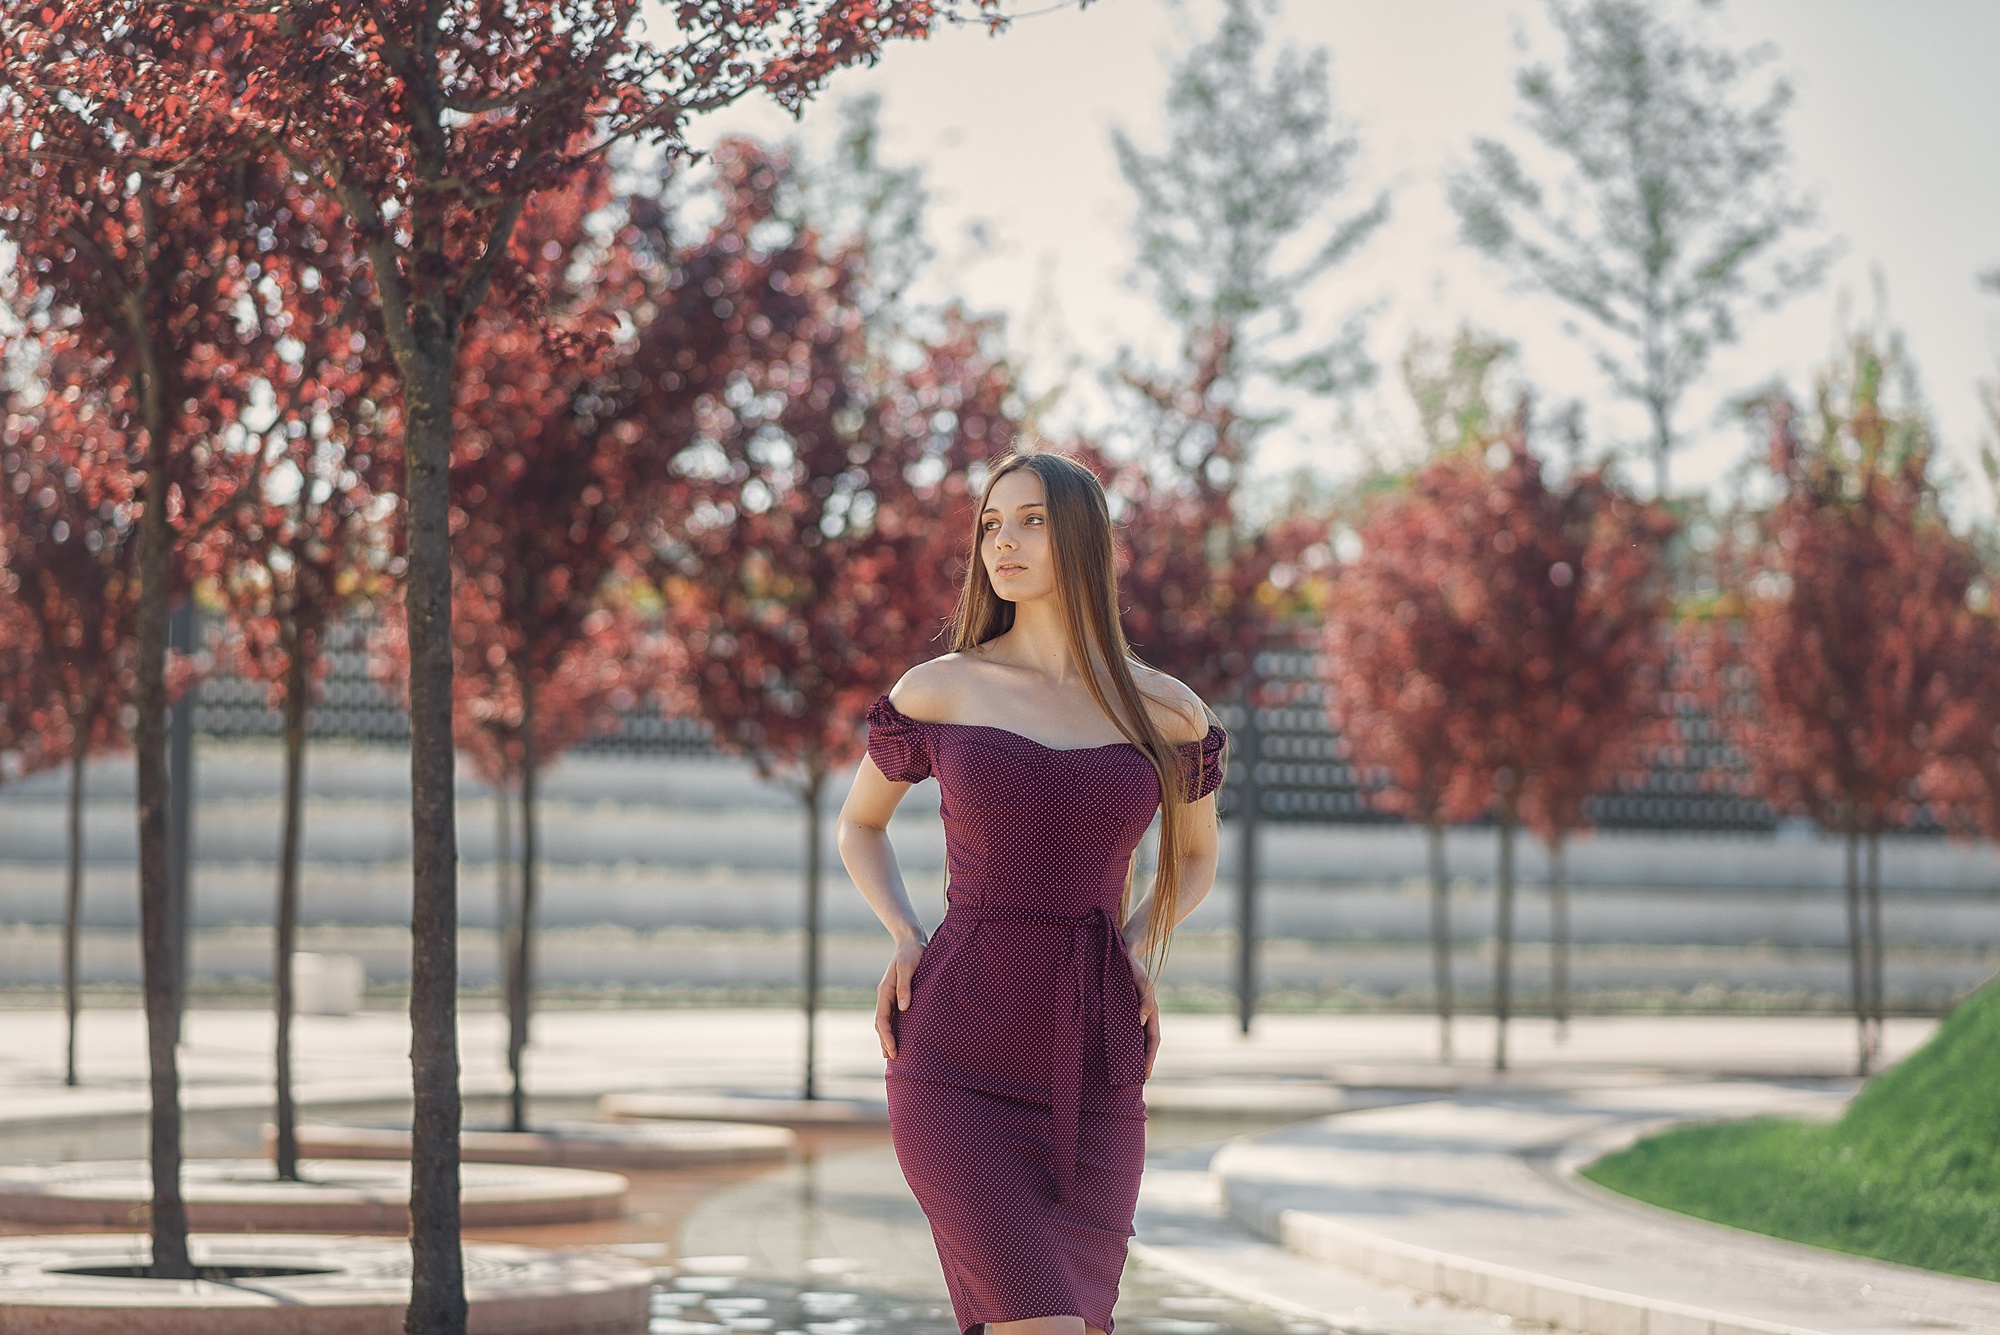 Women Model Brunette Long Hair Women Outdoors Park Purple Dresses Trees Bare Shoulders Fall Hands On 2000x1335